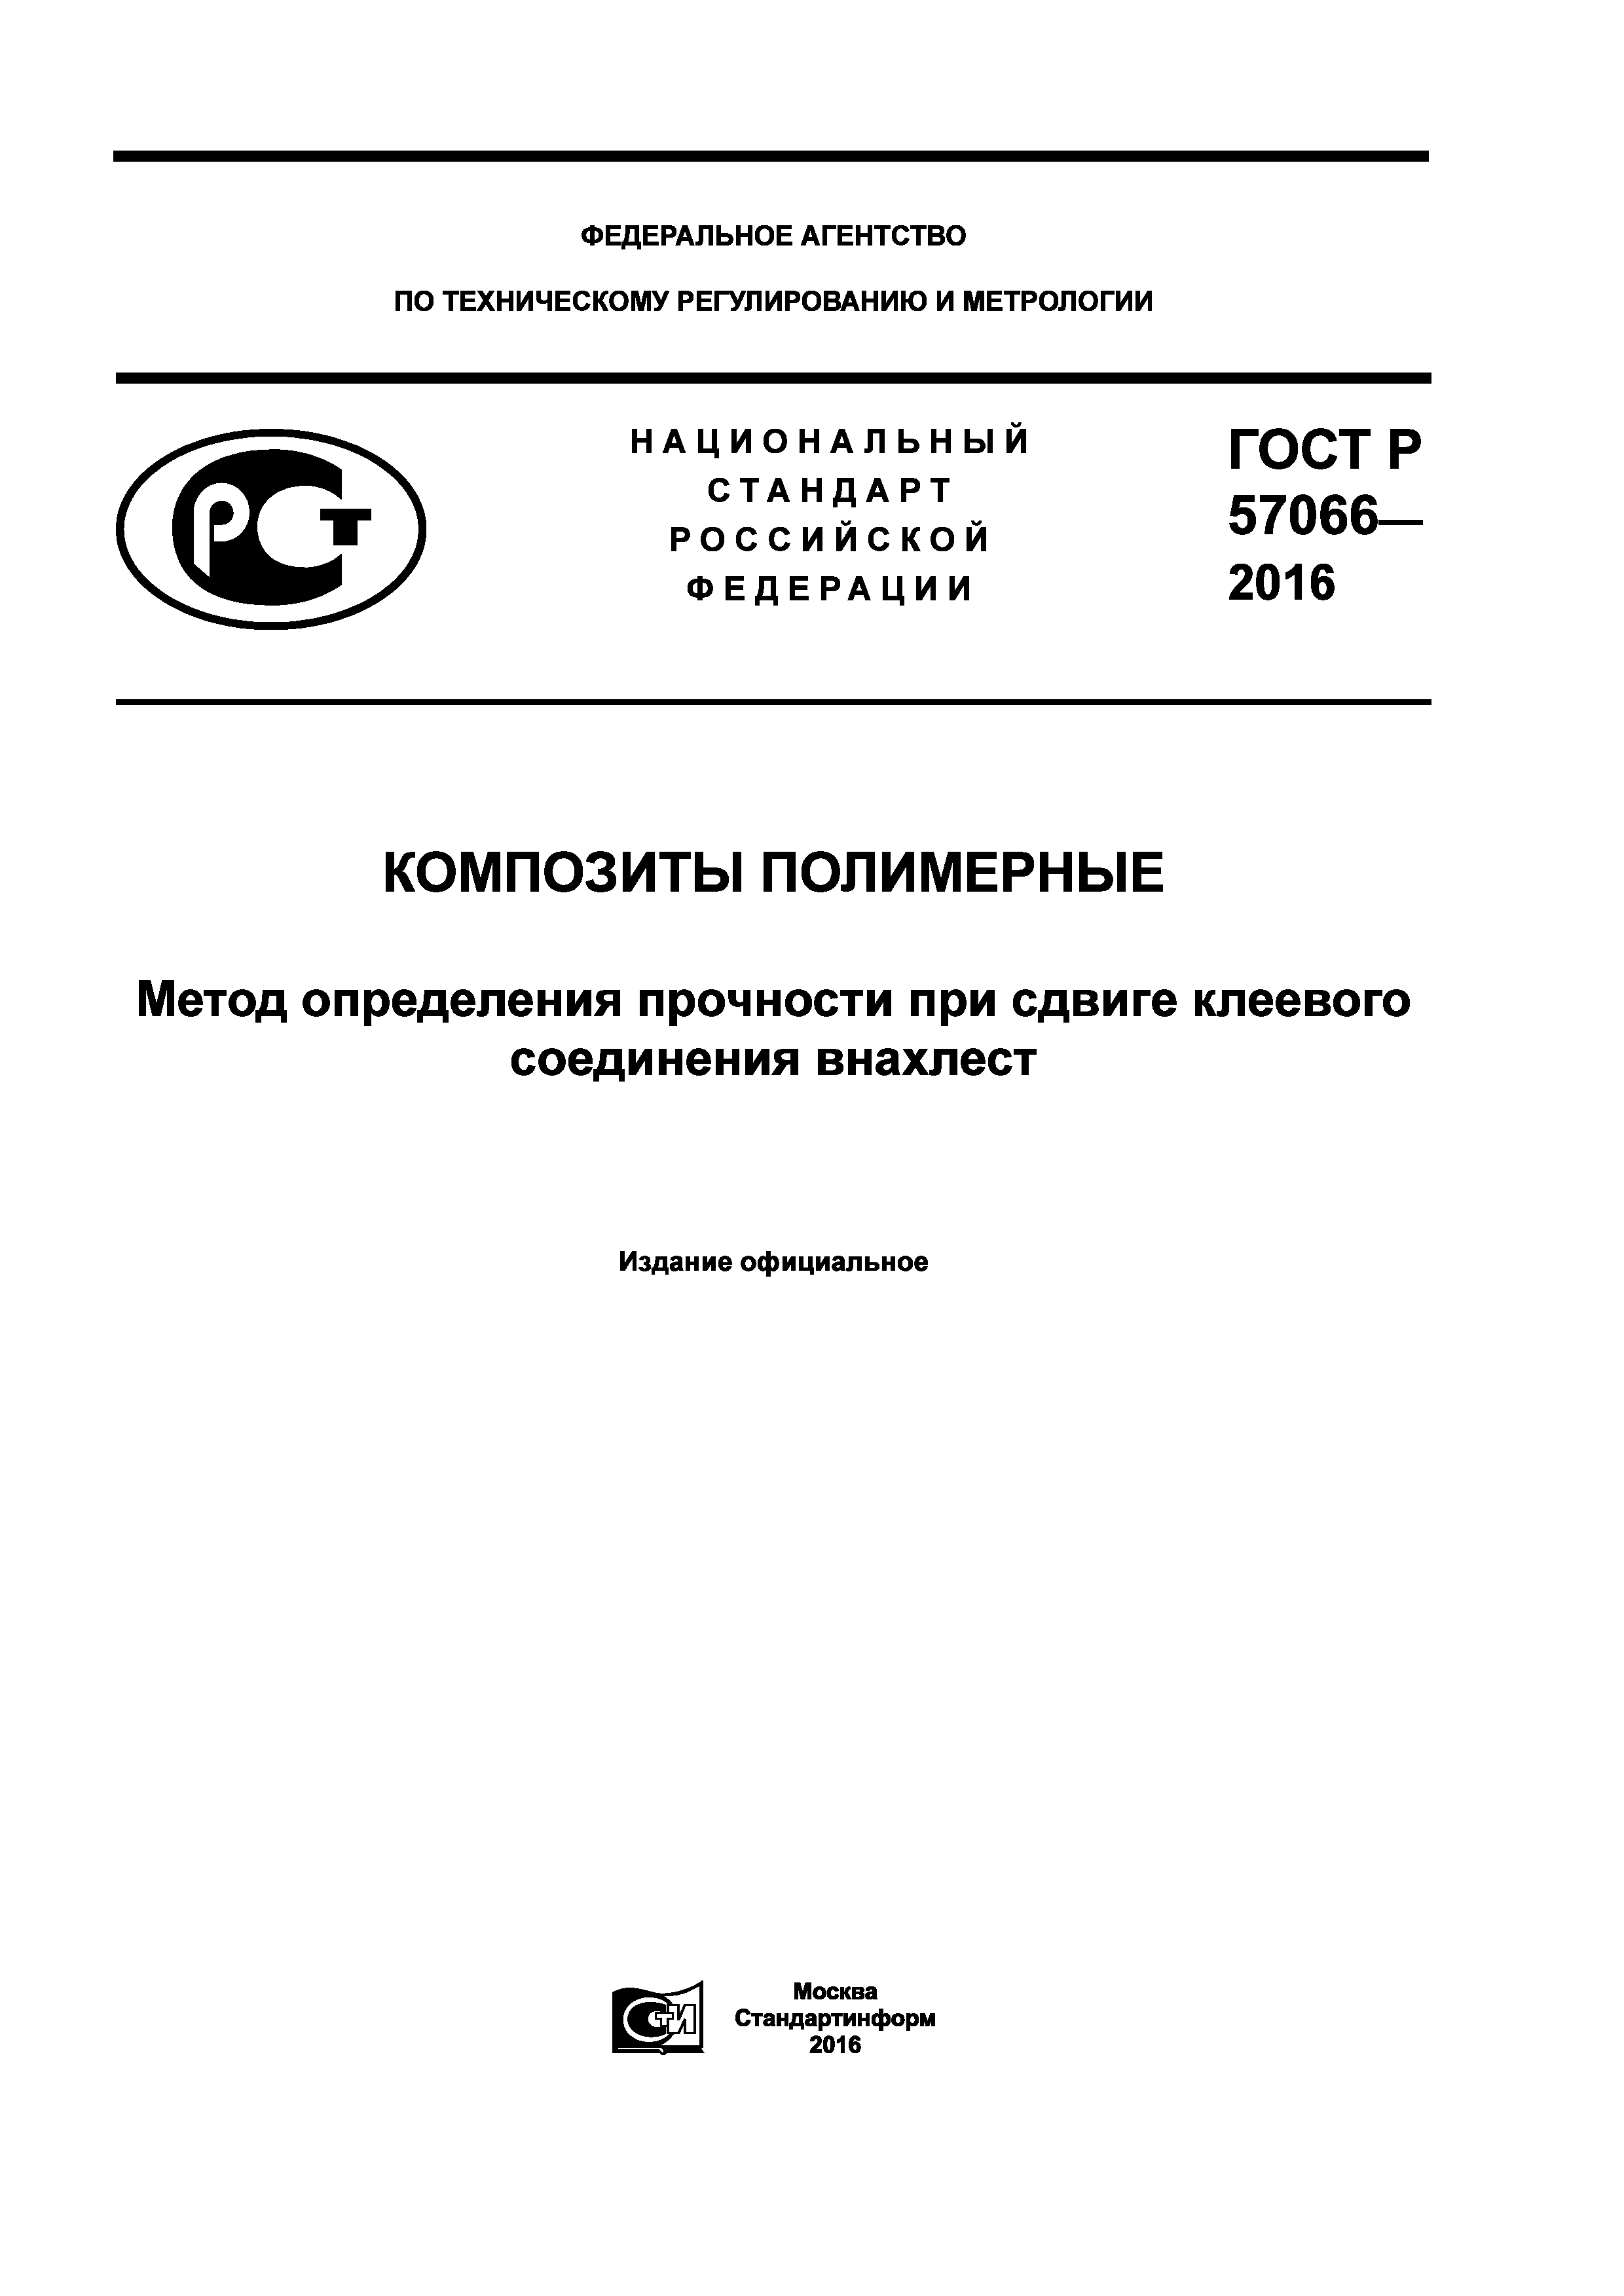 ГОСТ Р 57066-2016